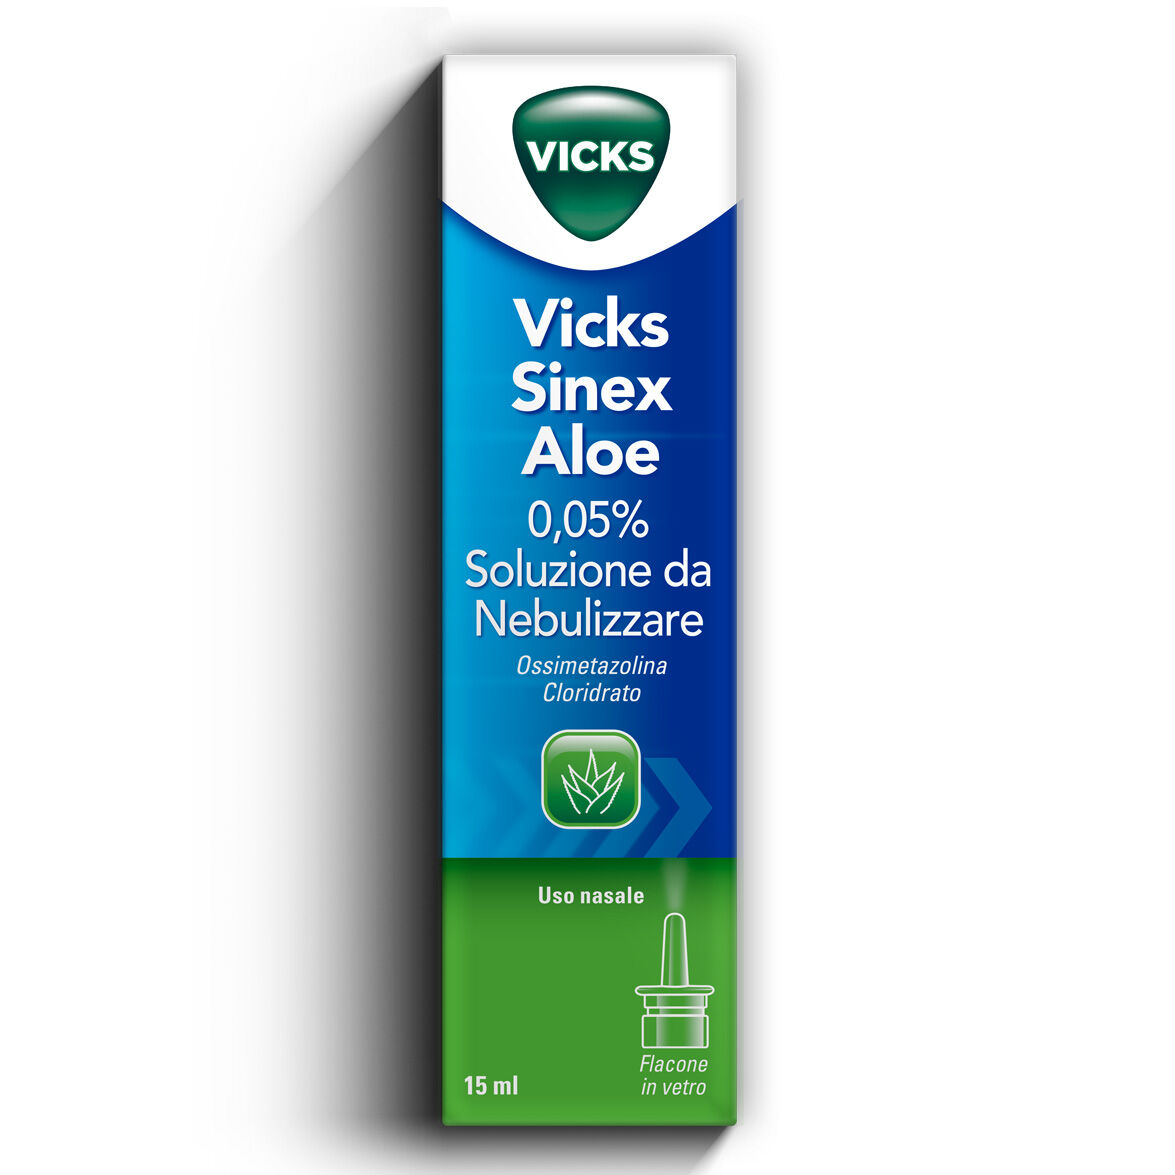 Procter Vicks Vicks Sinex Aloe Soluzione Da Nebulizzare 15ml 0,05%